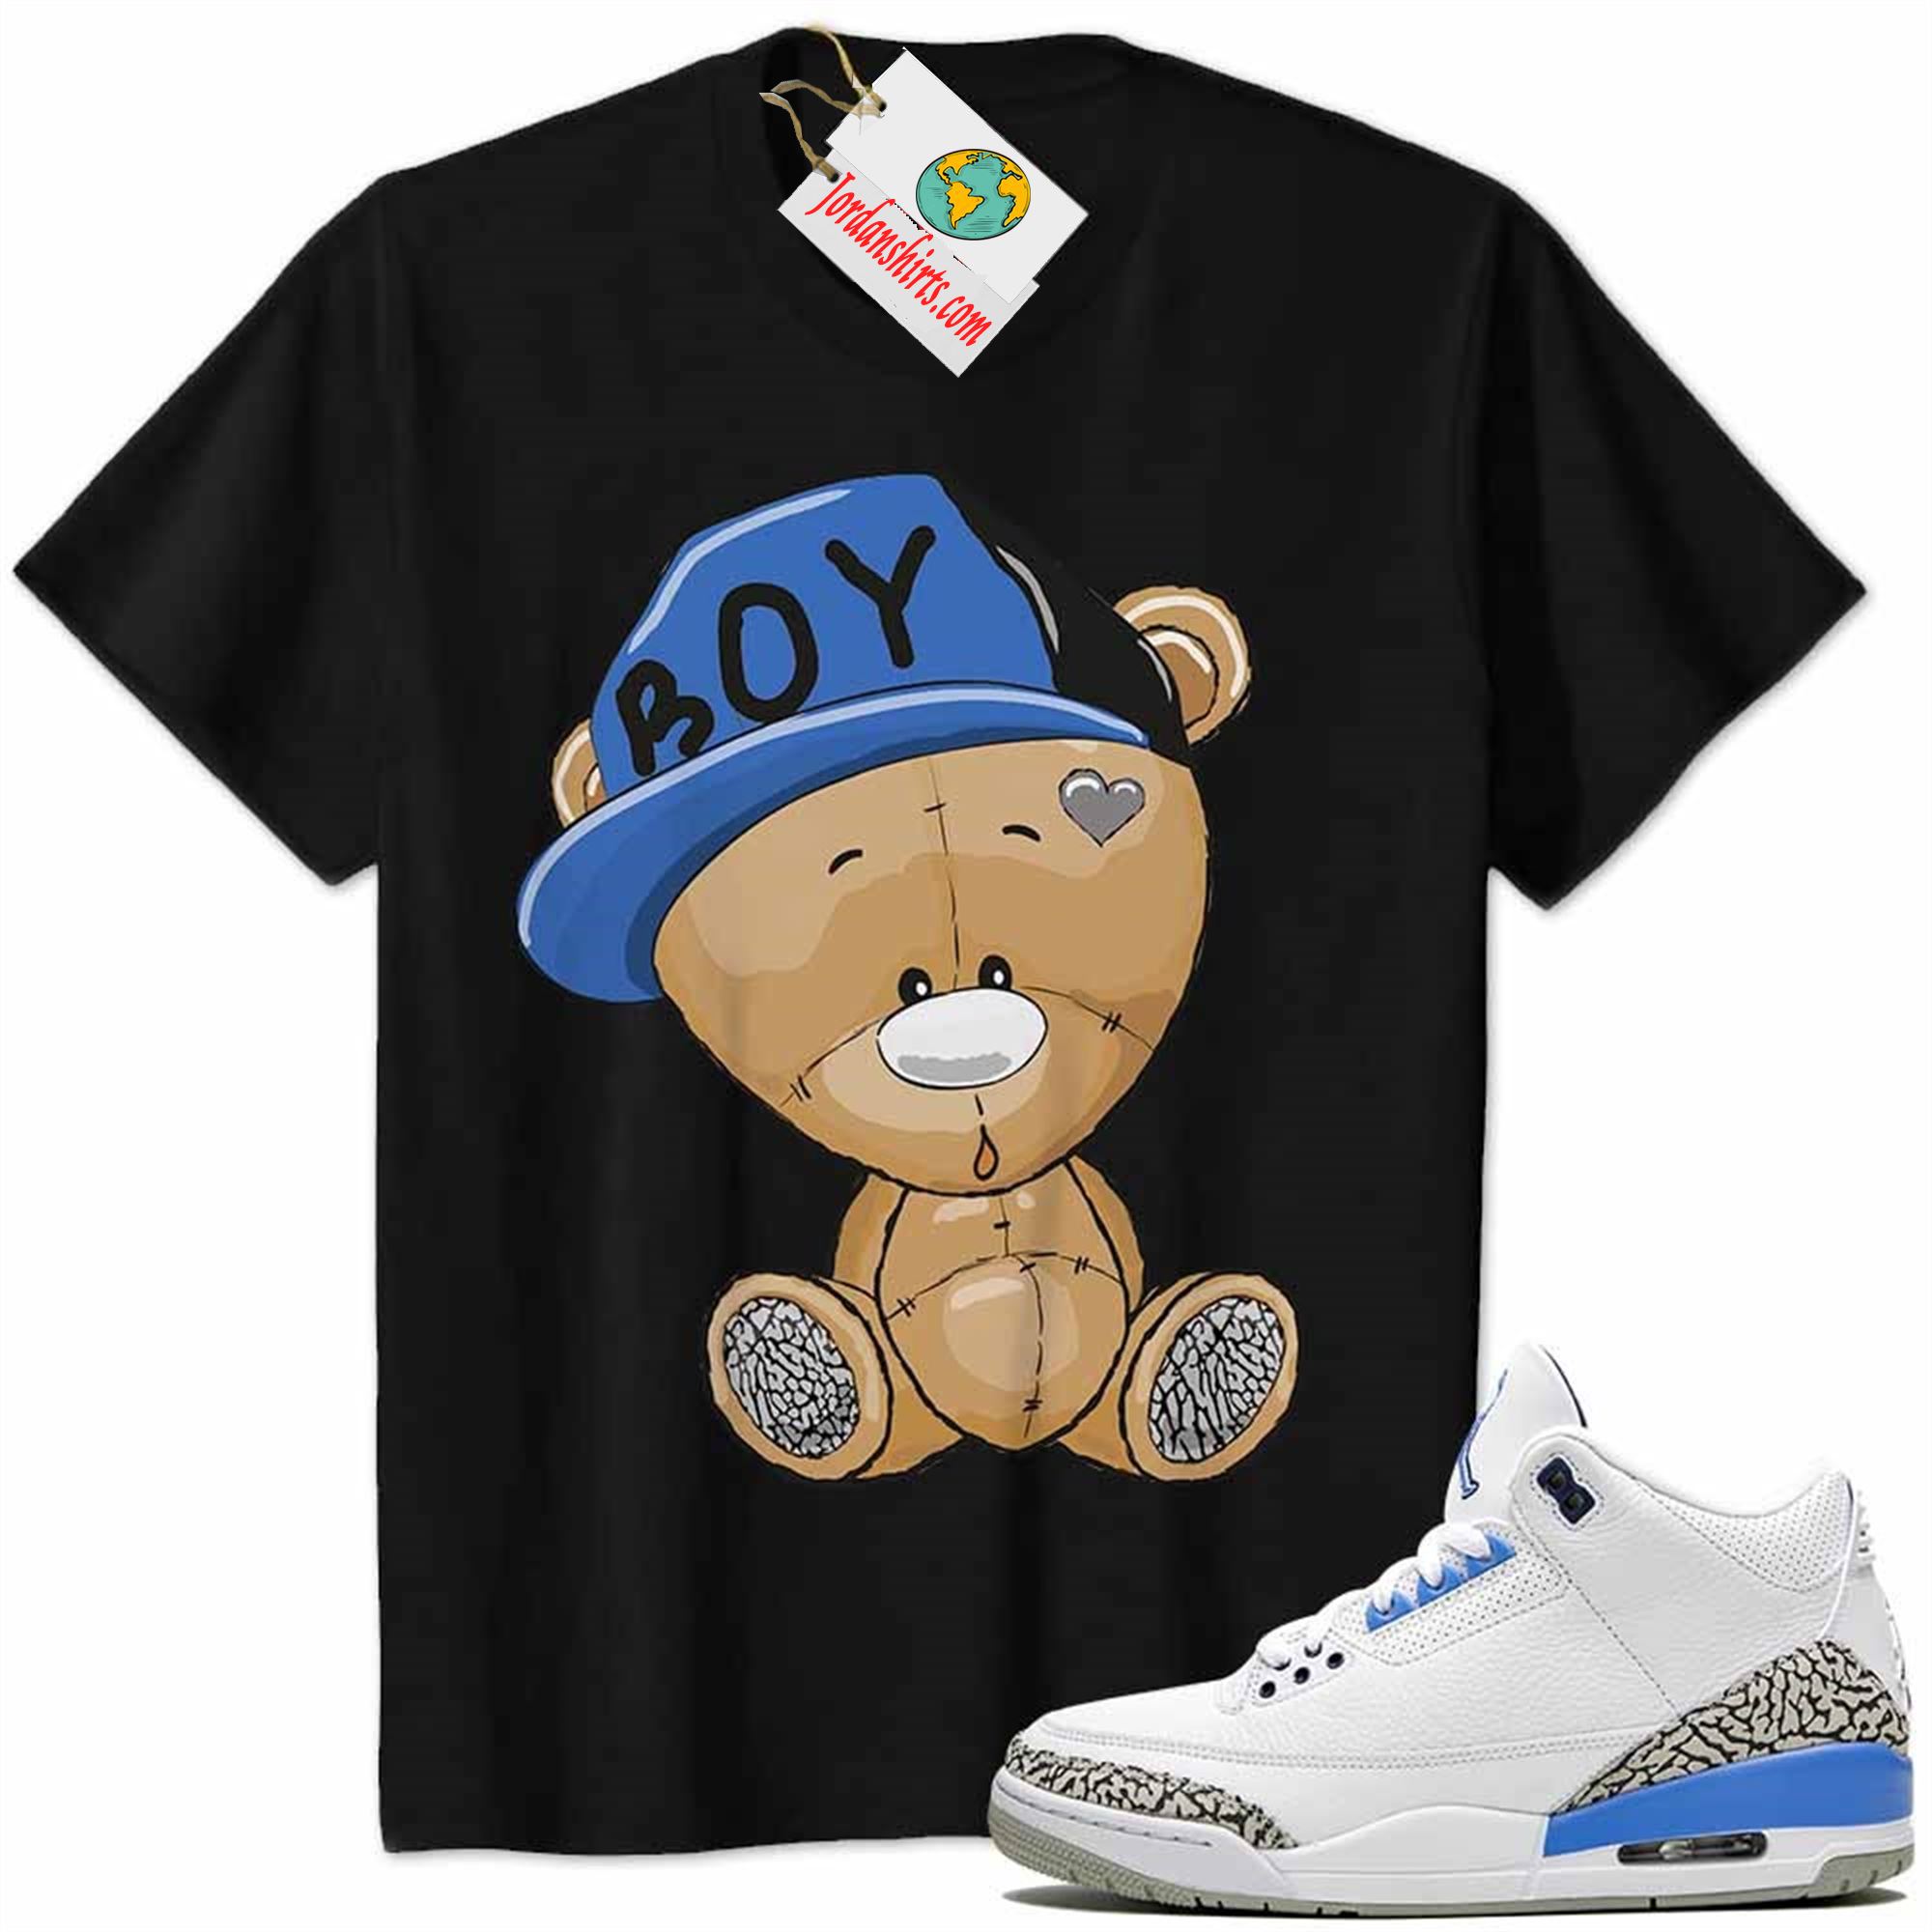 Jordan 3 Shirt, Jordan 3 Unc Shirt Cute Baby Teddy Bear Black Plus Size Up To 5xl